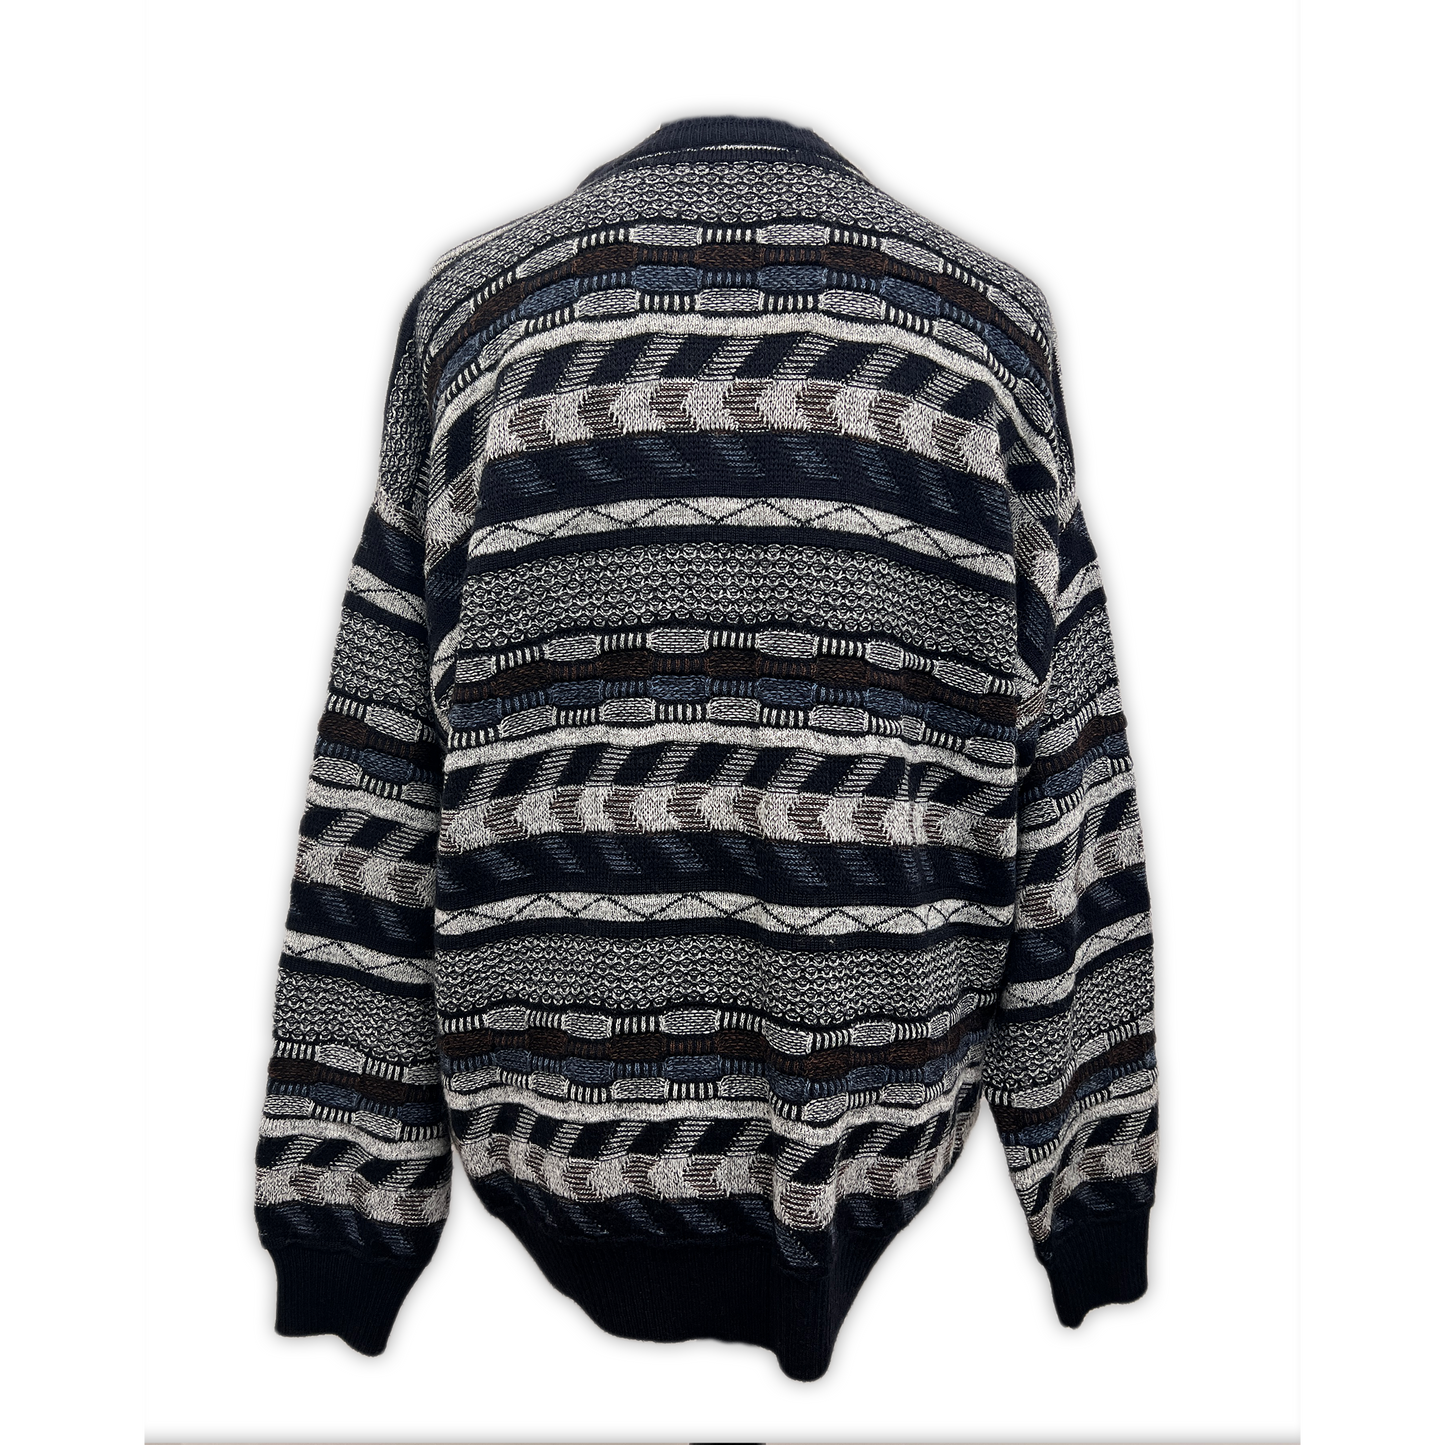 Jibbin Grandad Sweater - GS15